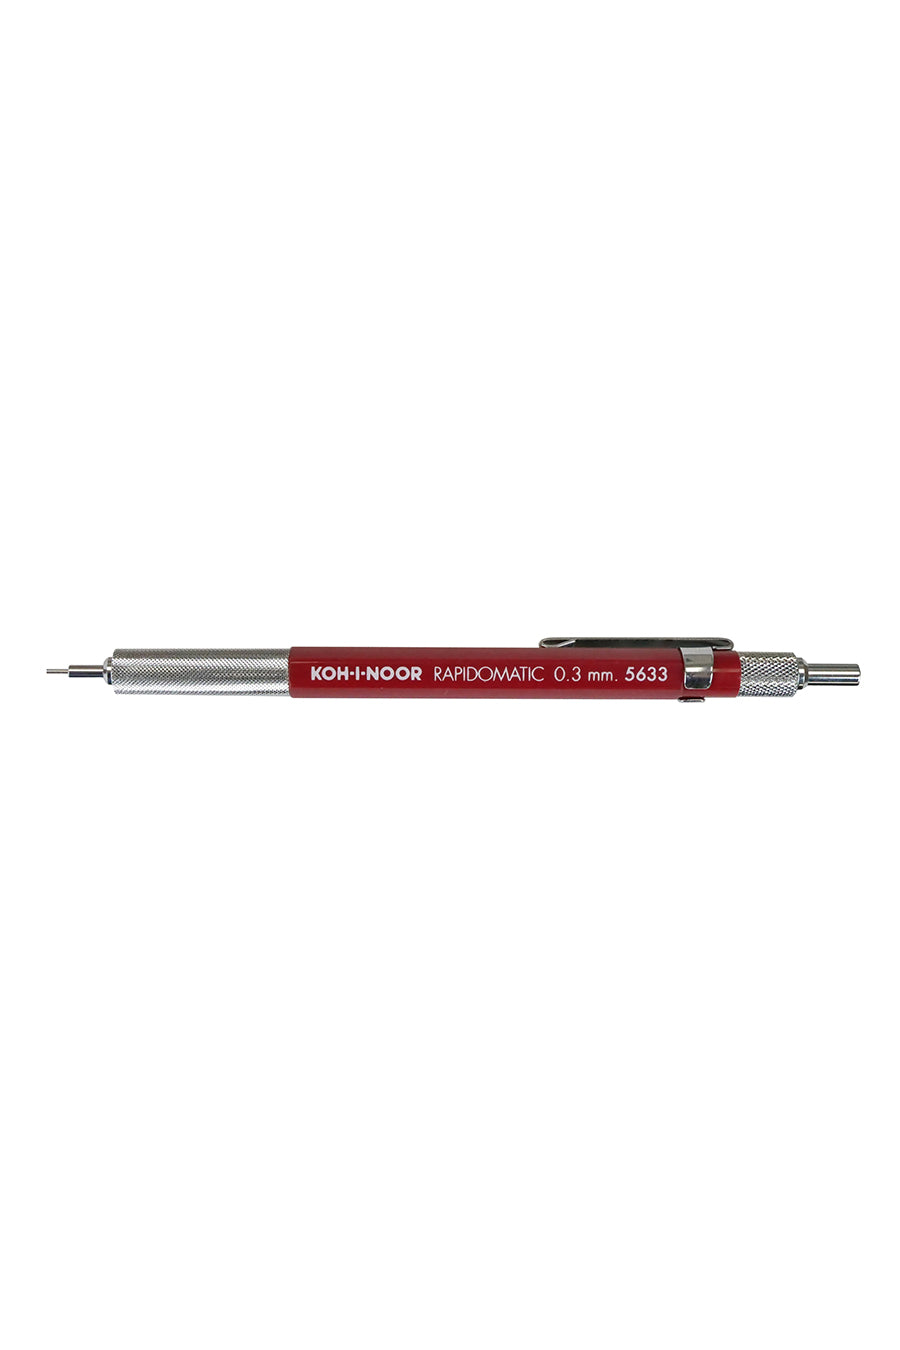 Koh-I-Noor® Rapidomatic® Mechanical Pencils